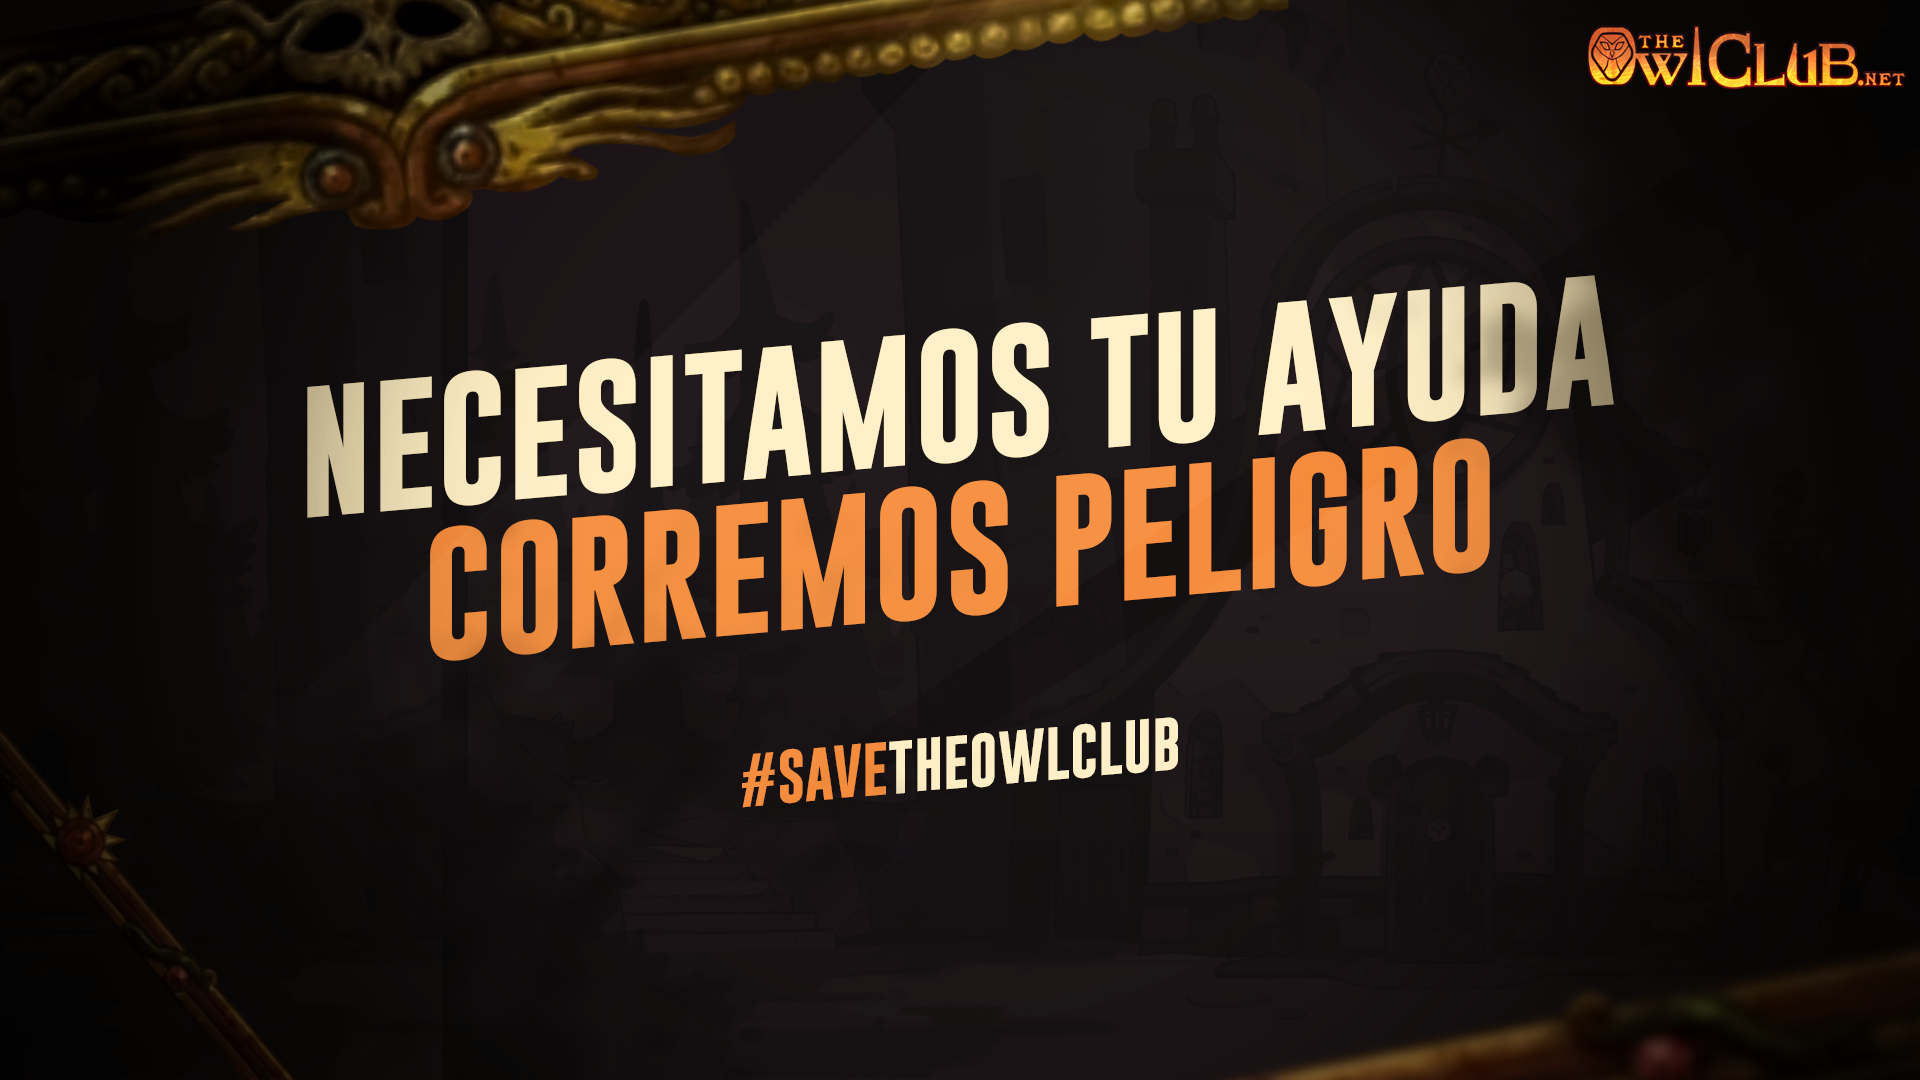 SaveTheOwlClub: We need your help – The Owl Club